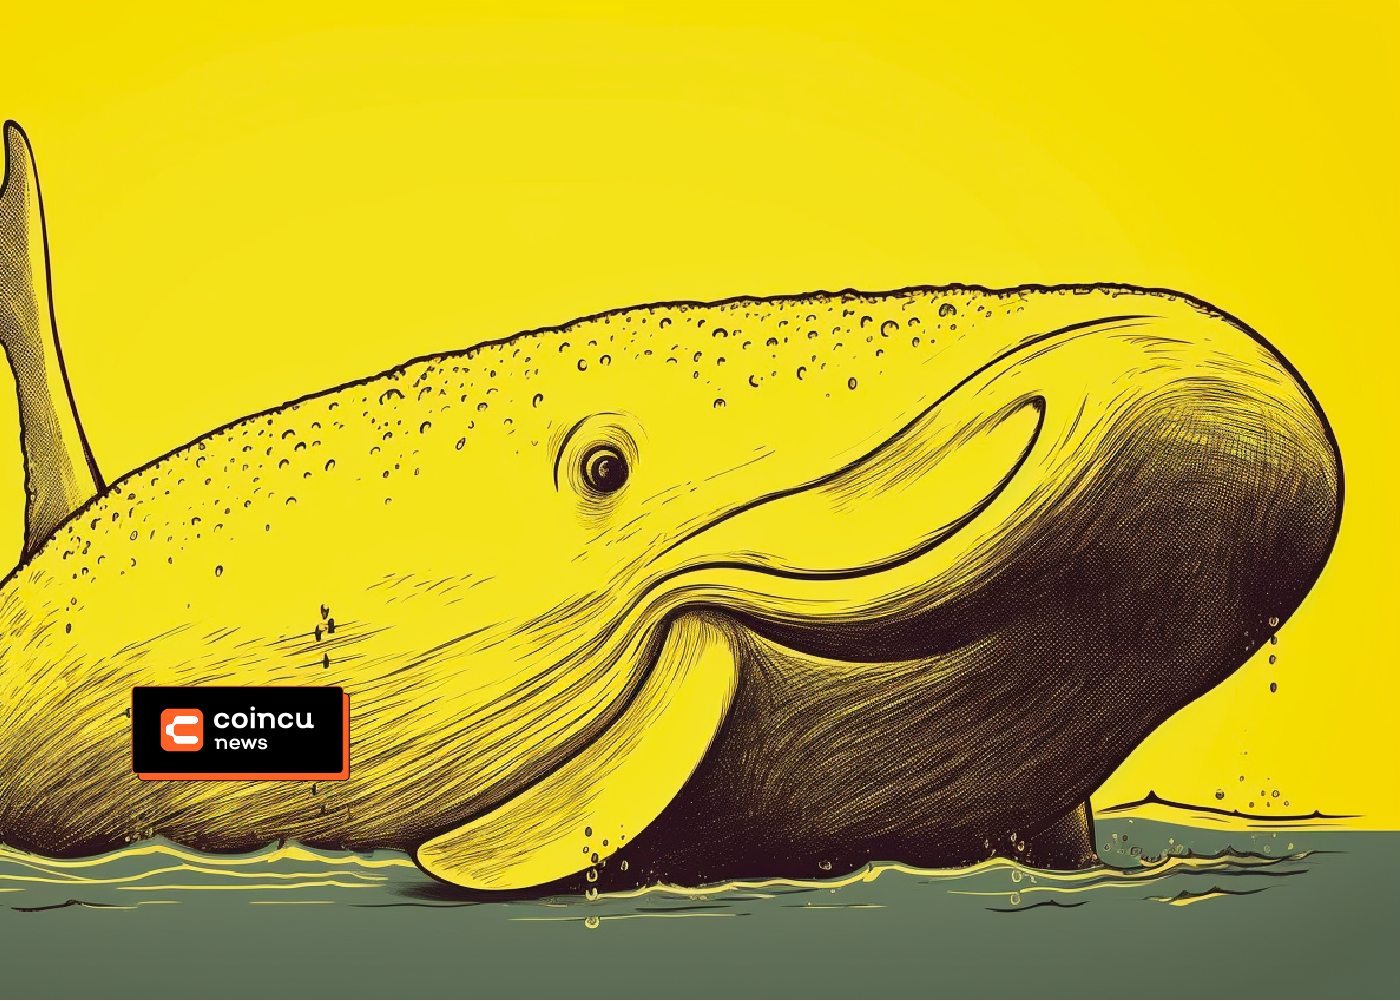 Giant-Whale-Deposit-$35M-BNB-To-Binance-Predicted-Preparing-To-Buy-$ARKM